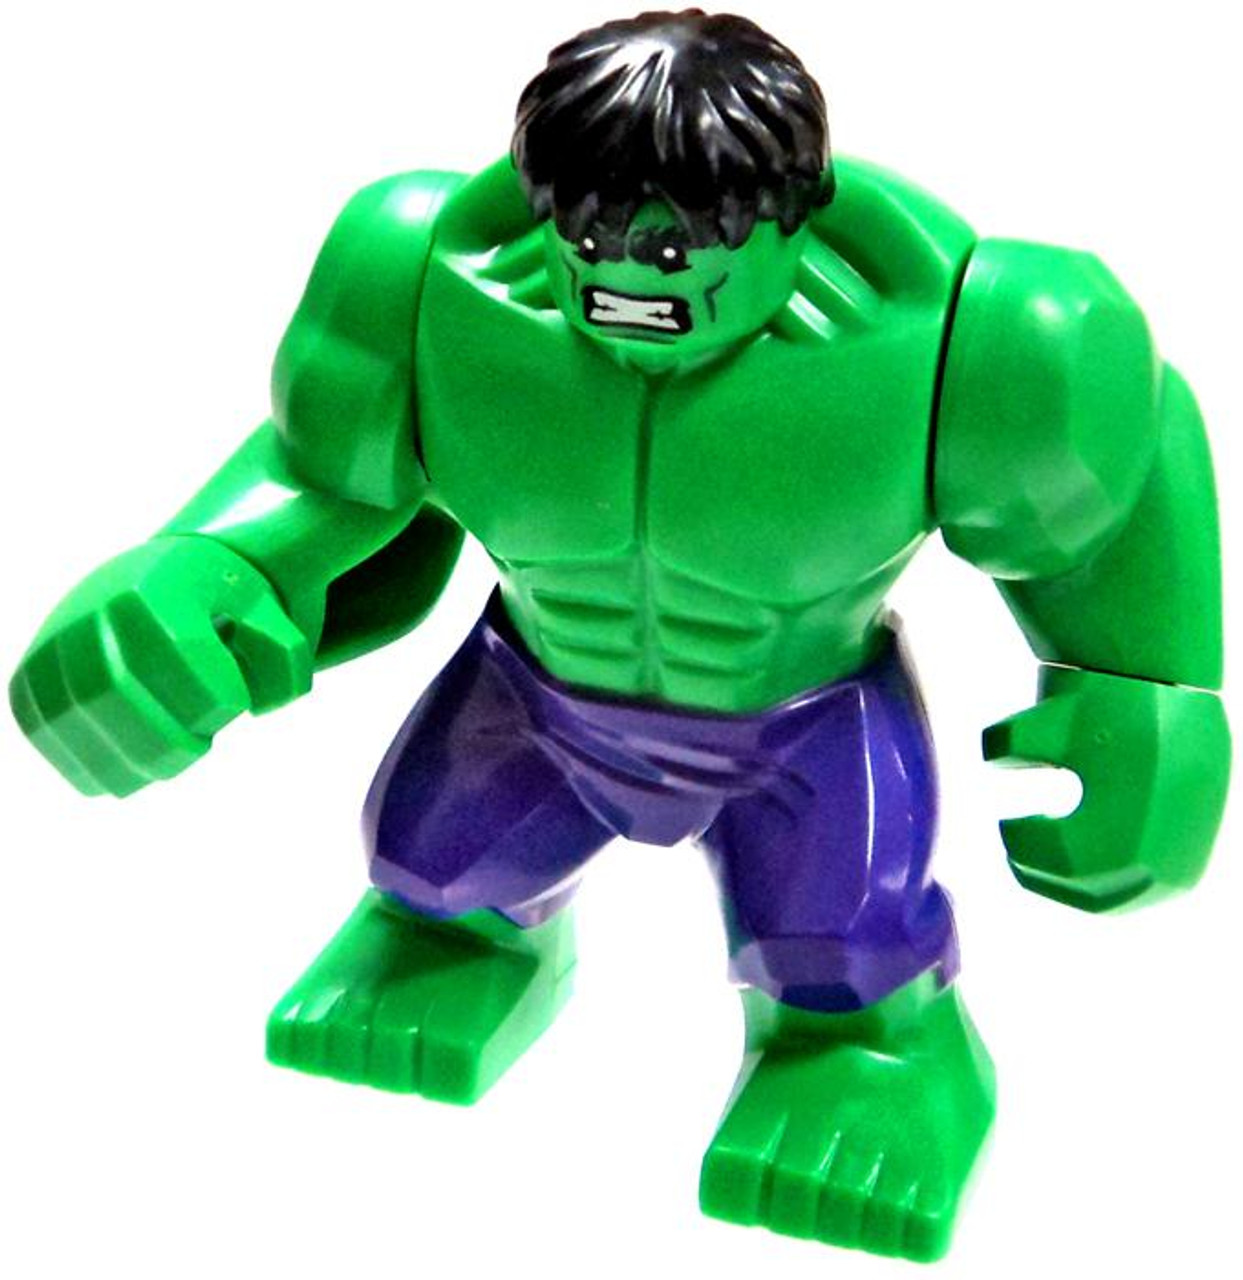 incredible hulk lego figure